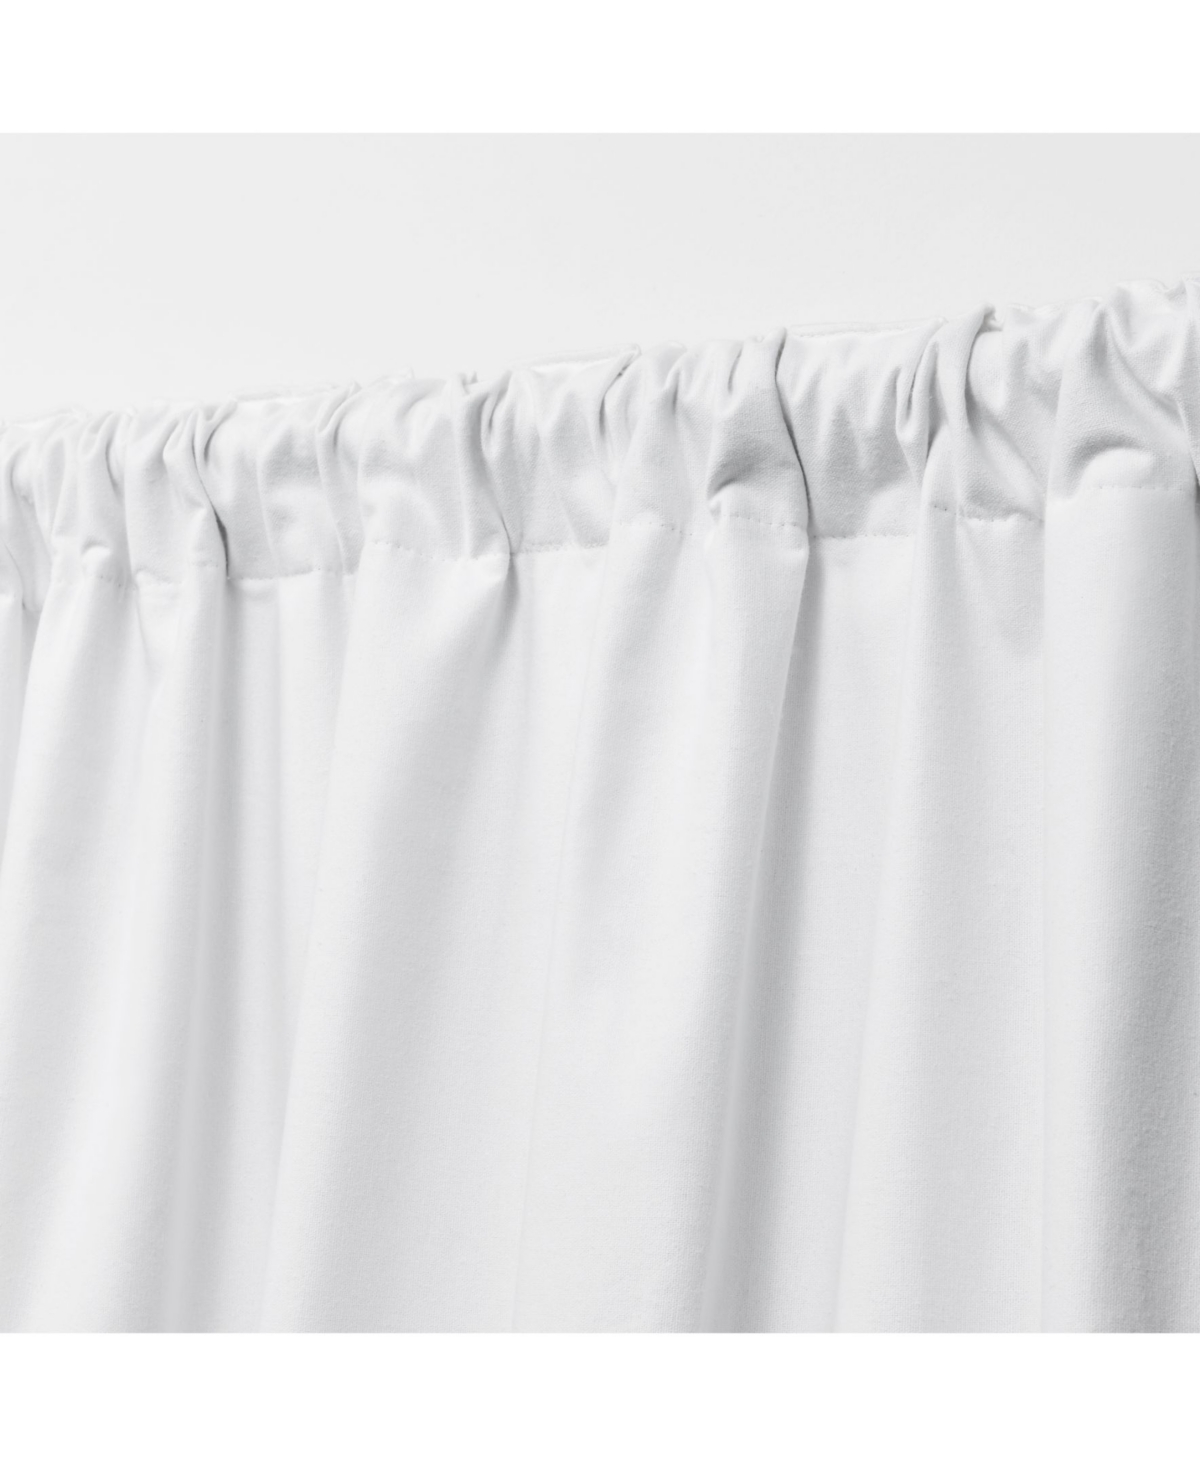 Shop Lauren Ralph Lauren Waller Blackout Solid Back Tab Rod Pocket Curtain Panel, 52" X 63" In Taupe